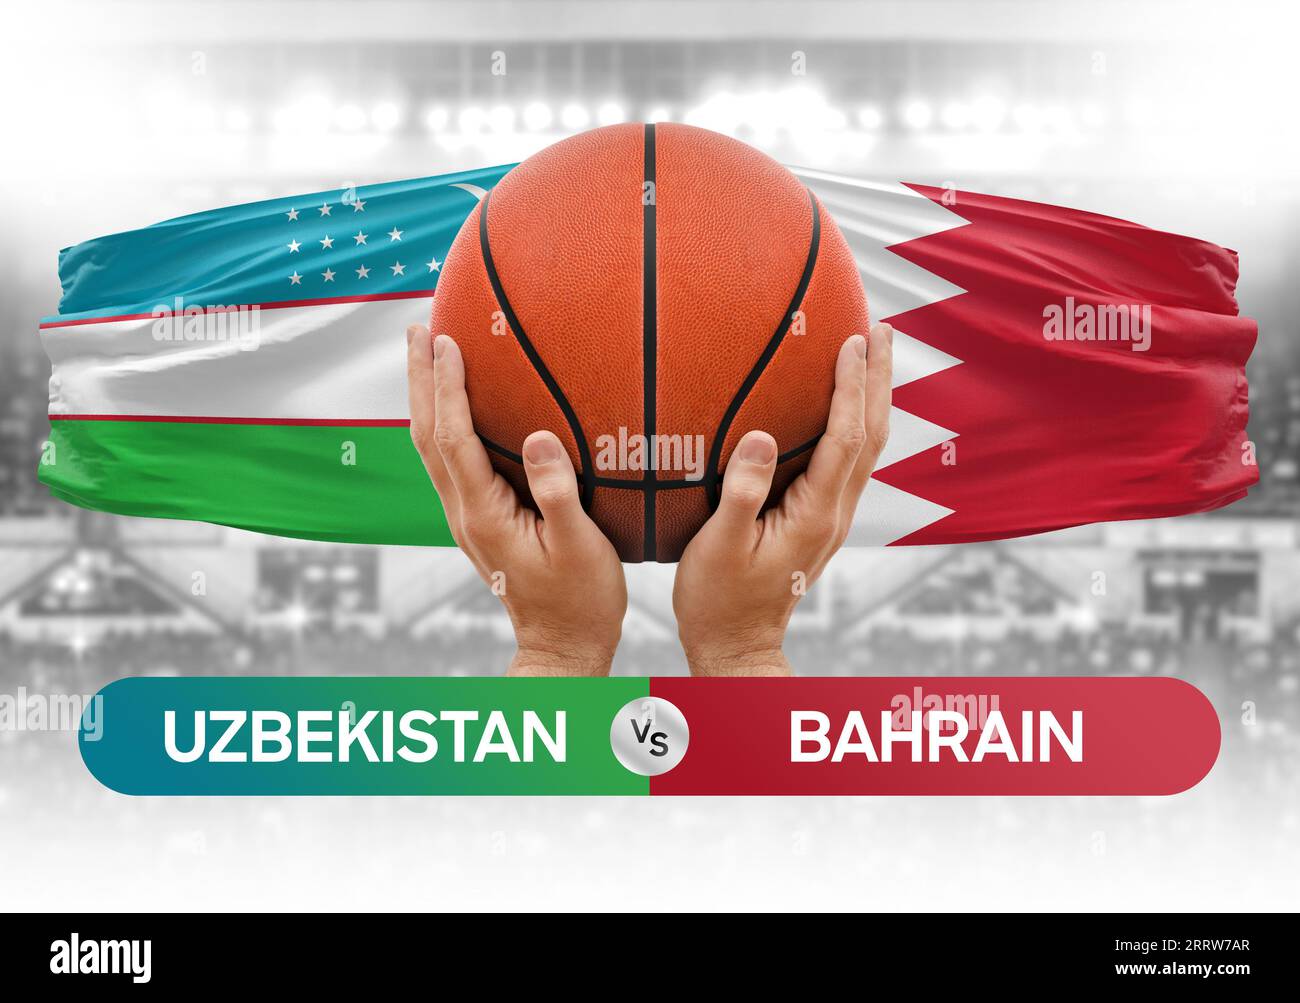 Uzbekistan vs Bahrain national basketball teams basket ball match competition cup concept image Stock Photo